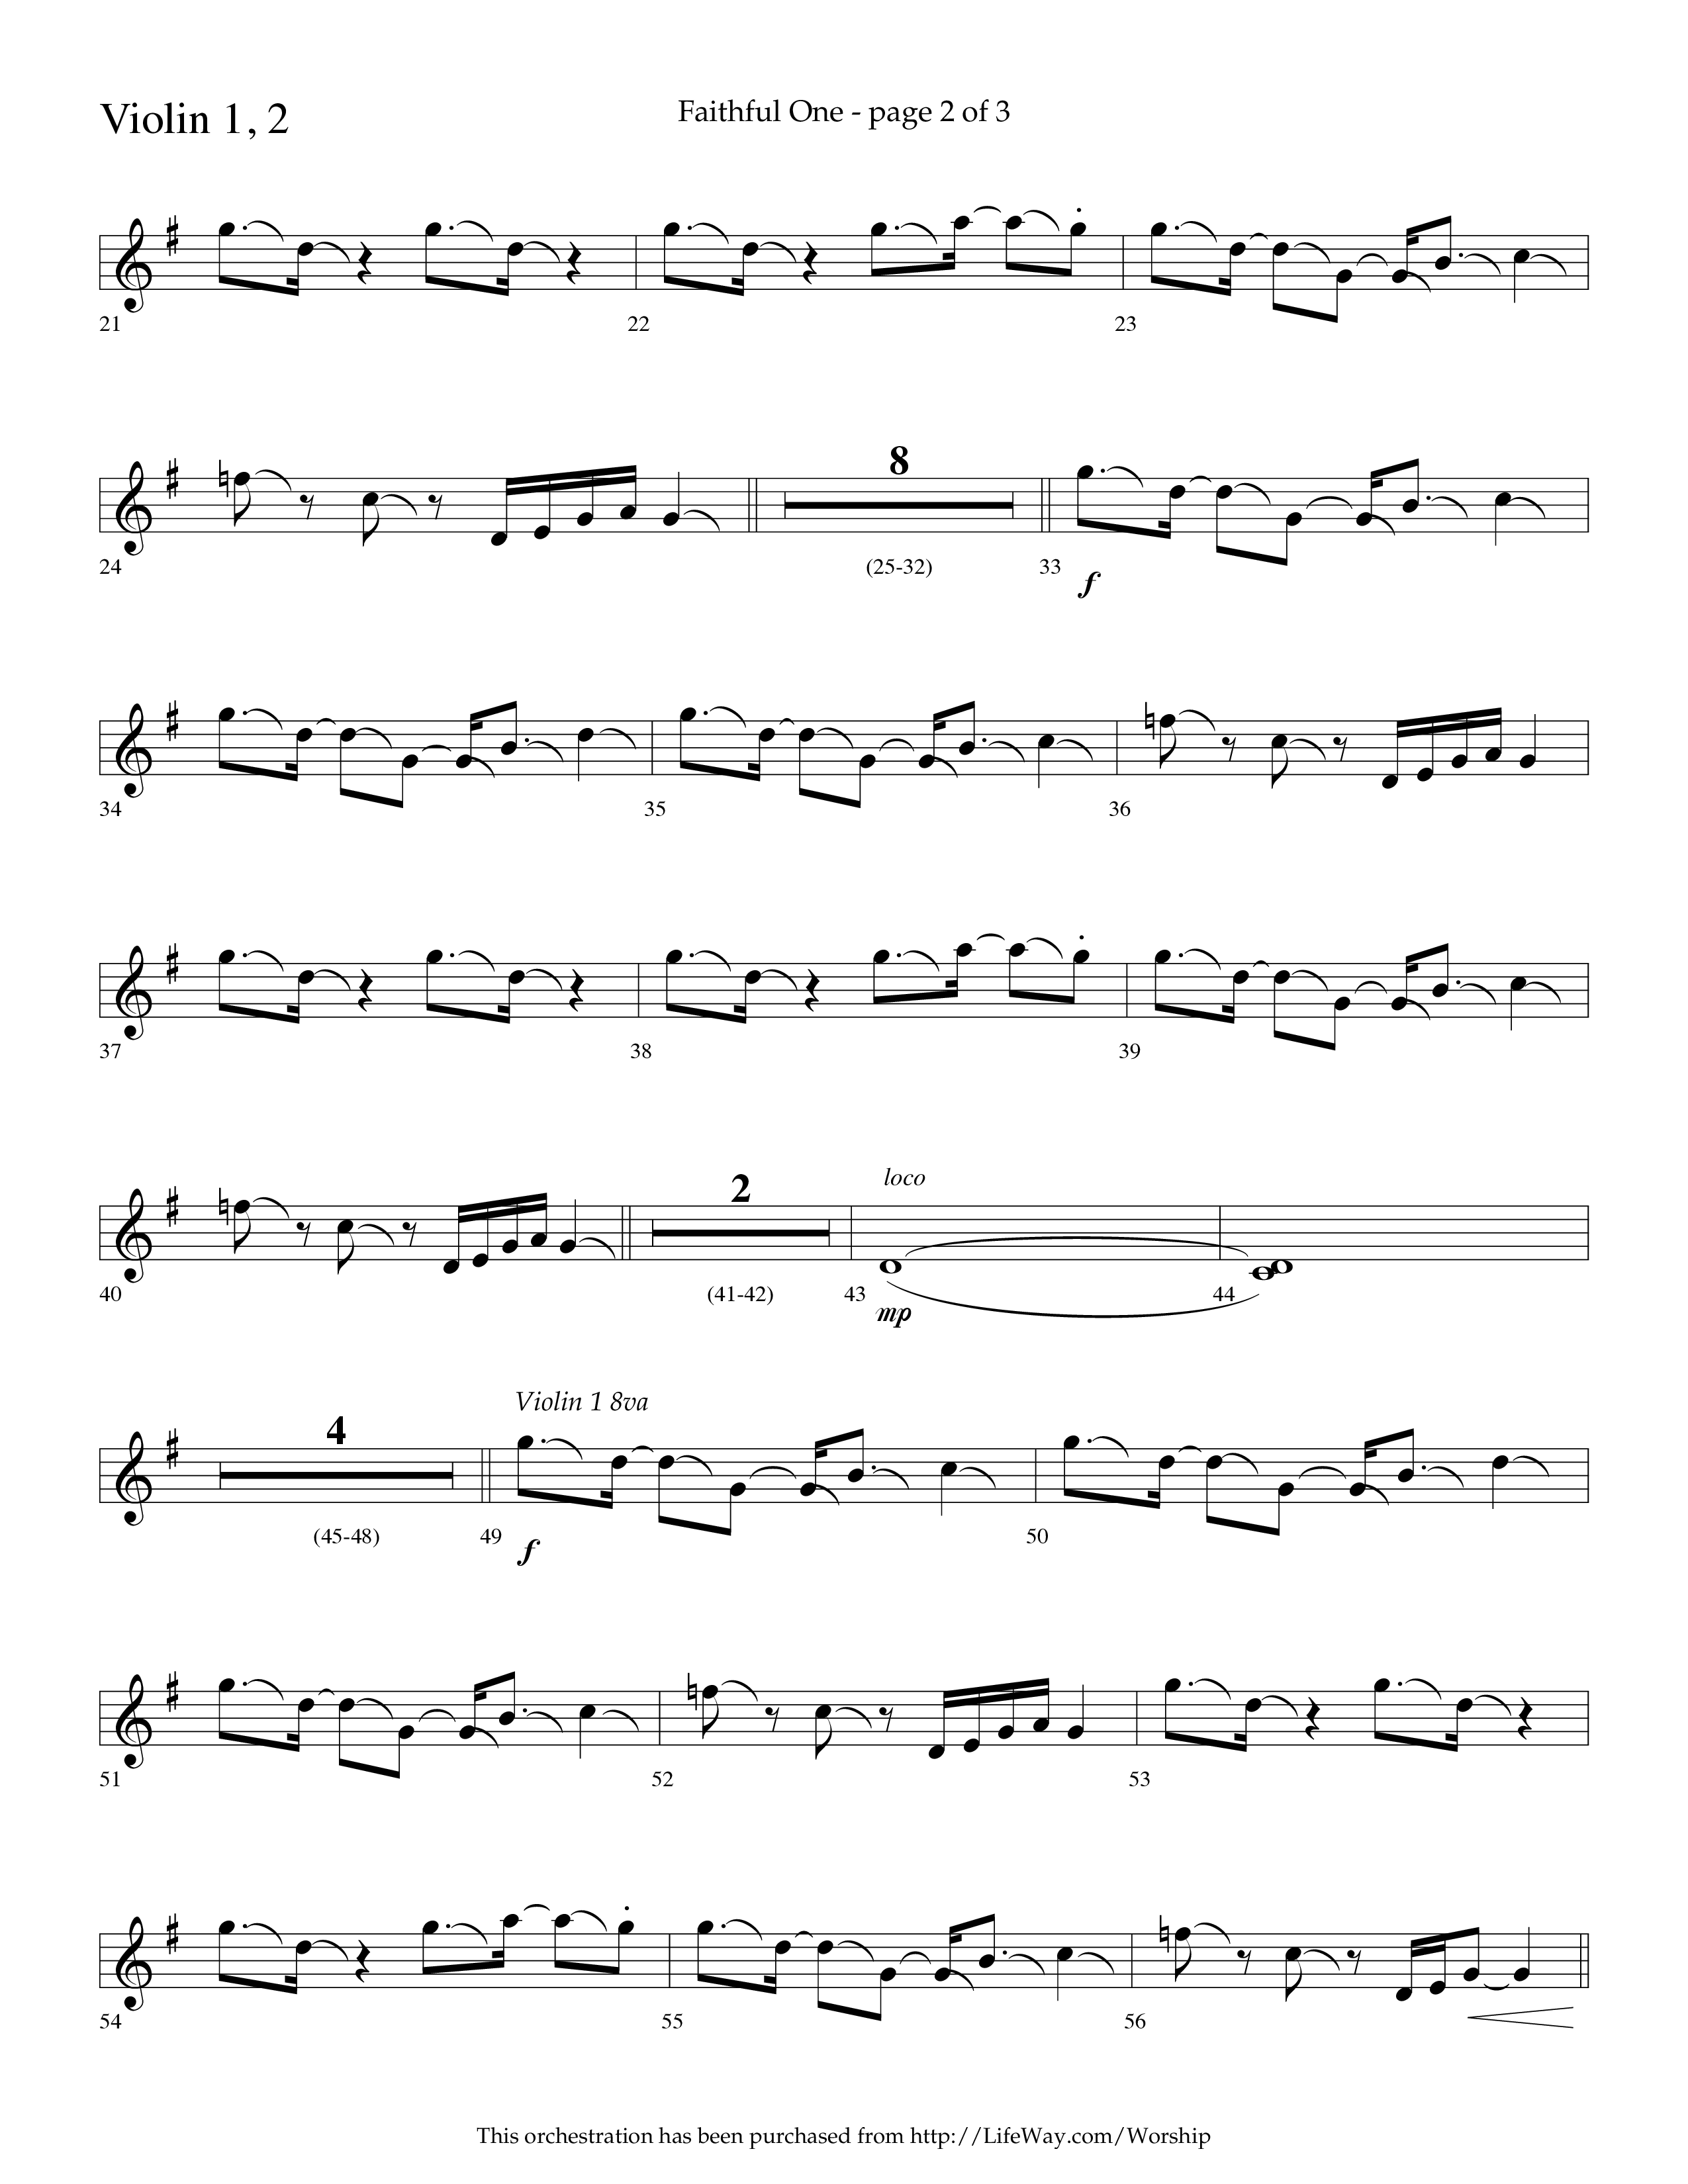 Faithful One (Choral Anthem SATB) Violin 1/2 (Lifeway Choral / Arr. Cliff Duren)